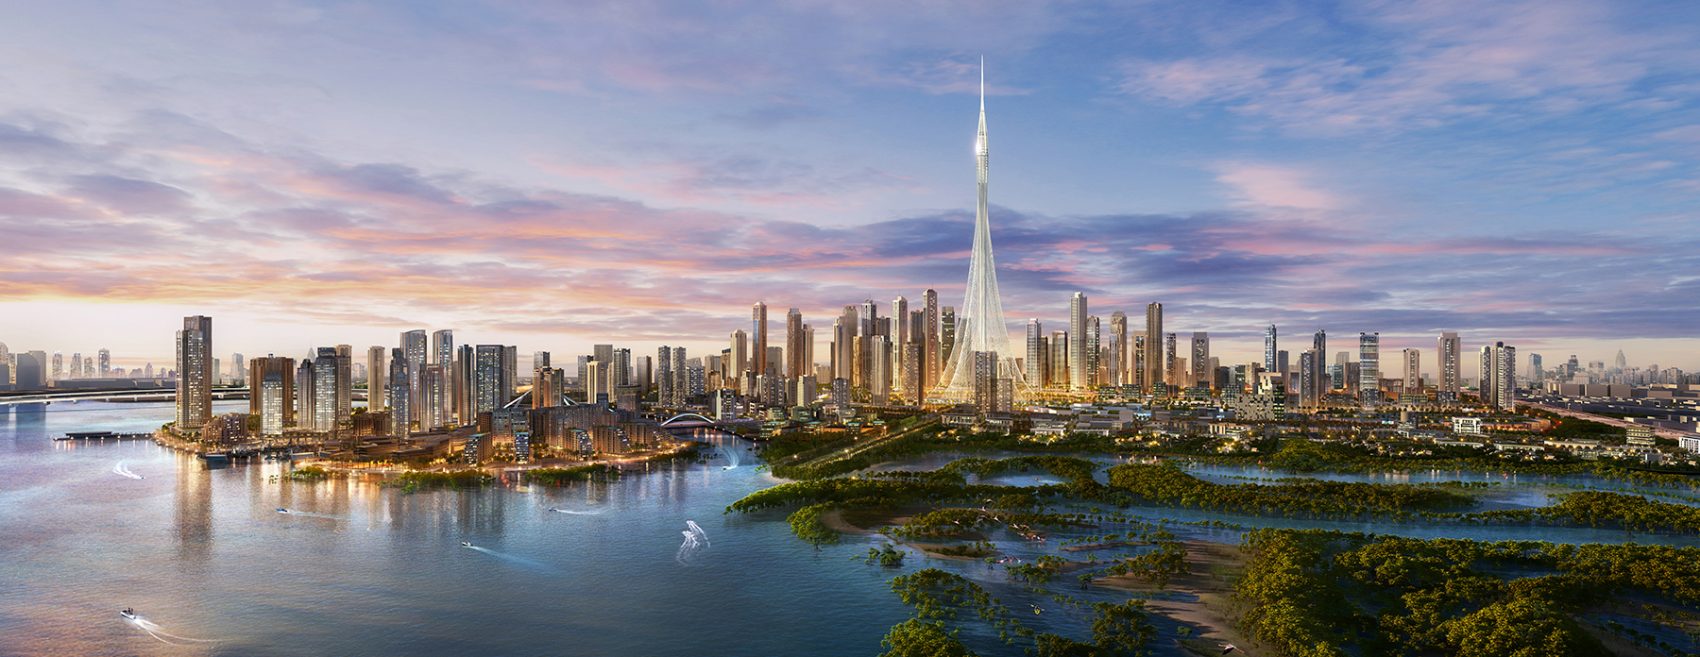 Dubai Creek Tower: Dubai’s New Monumental Project - Coming Soon in UAE